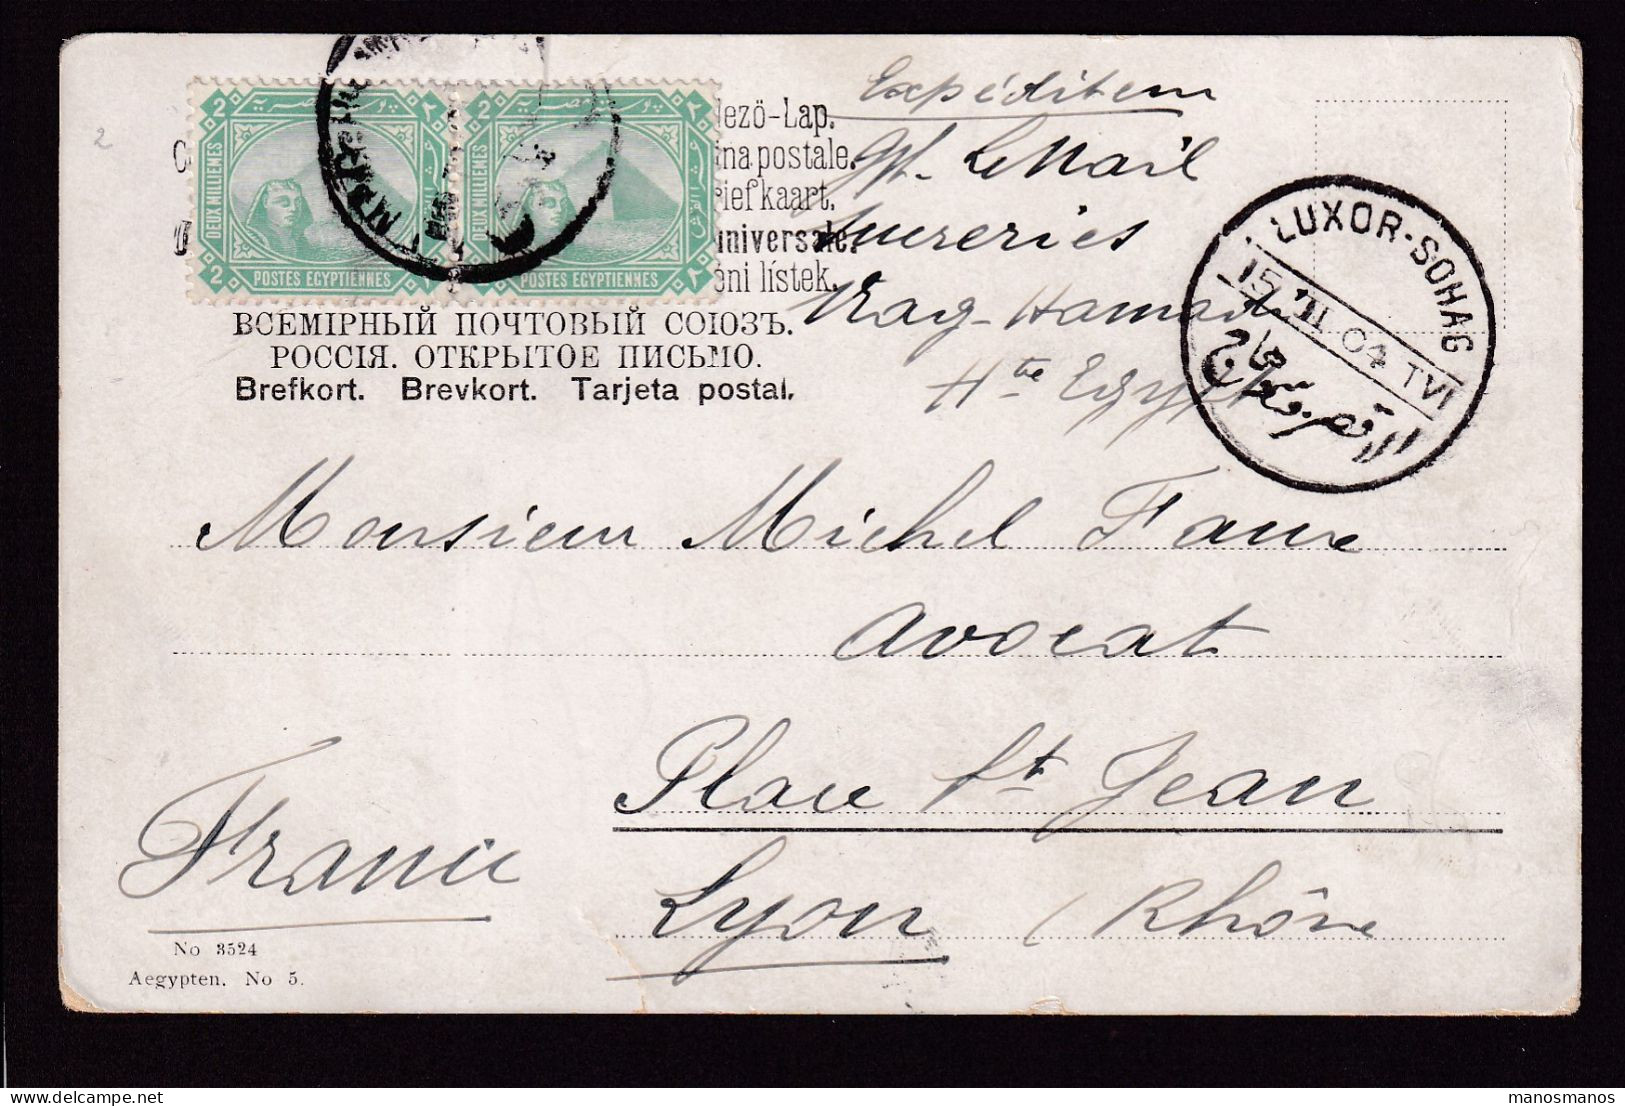 385/31 -- EGYPT LUXOR-SOHAG TPO  - Viewcard cancelled NAGH HAMMADI 1904 to LYON France